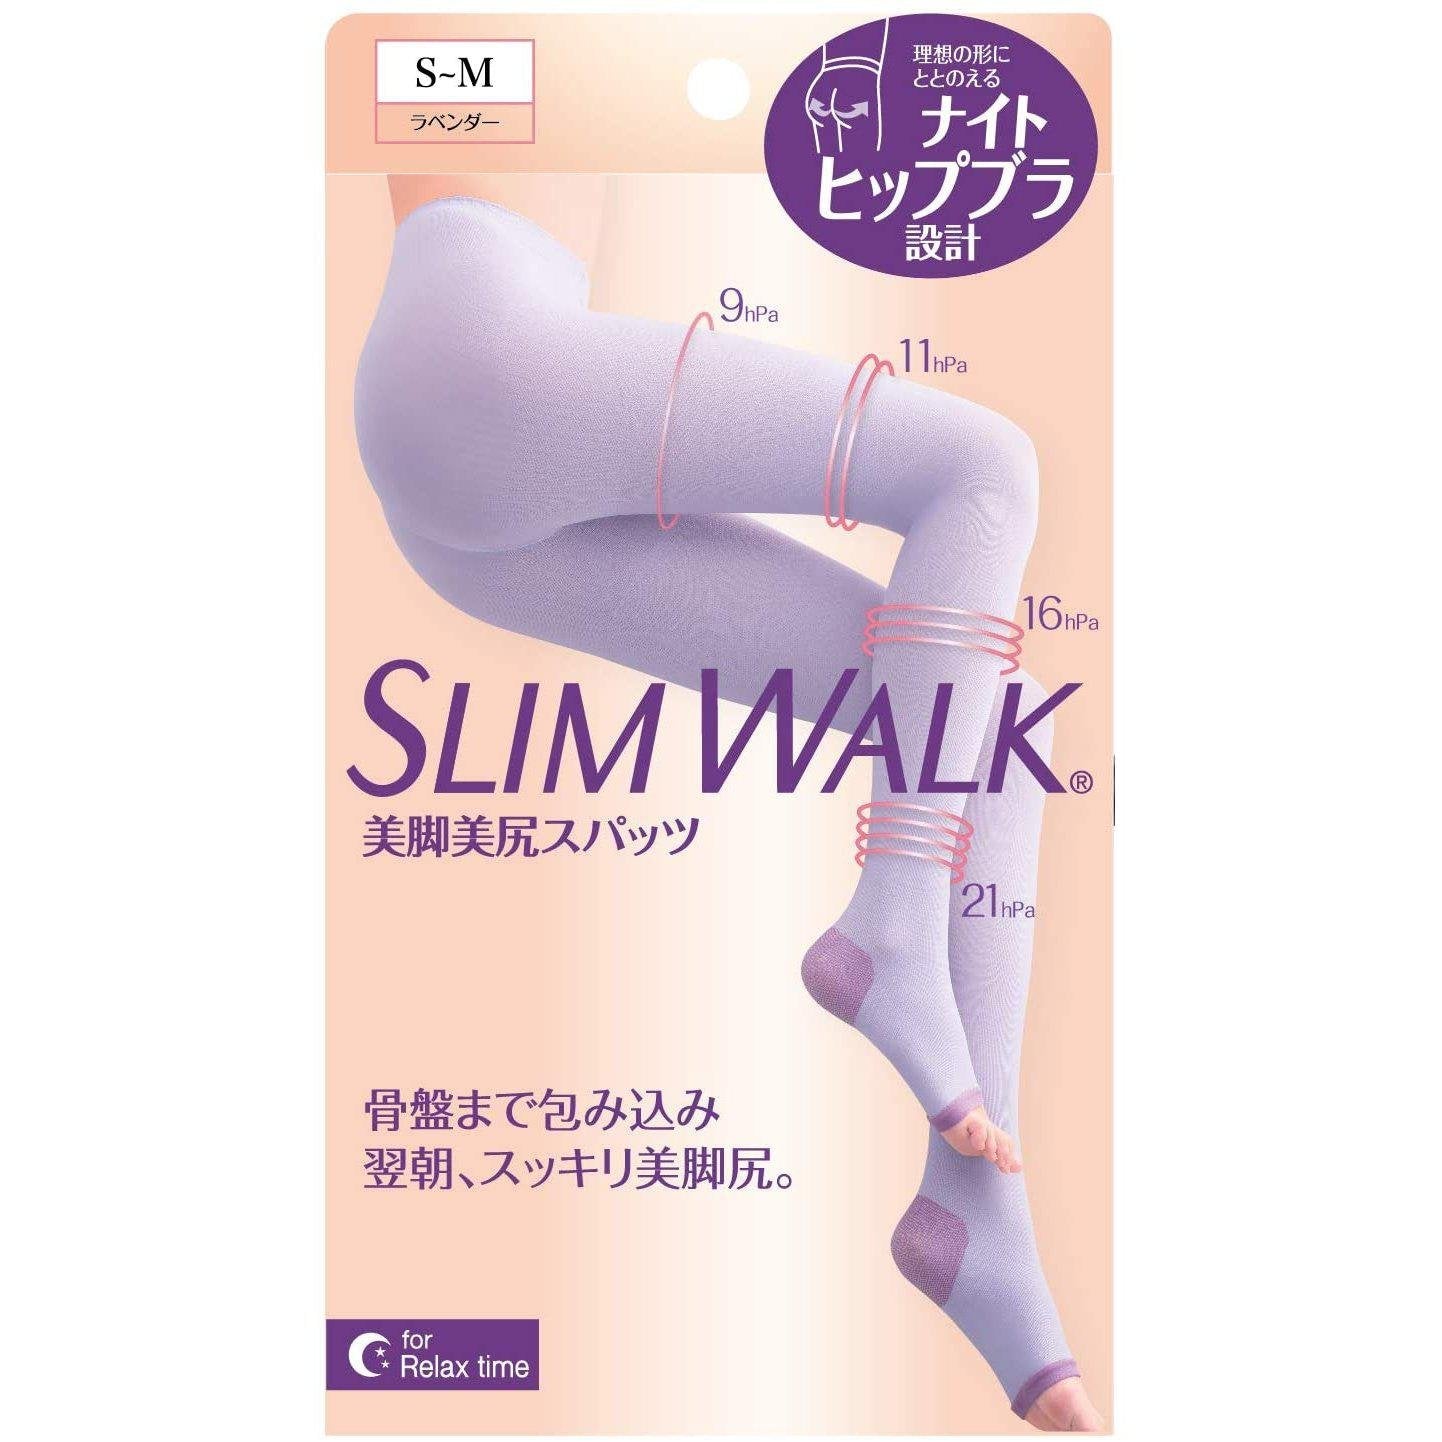 P-1-SLW-SPATSM-1-Slim Walk Slimming Compression Spats Leggings Lavender Size S-M.jpg